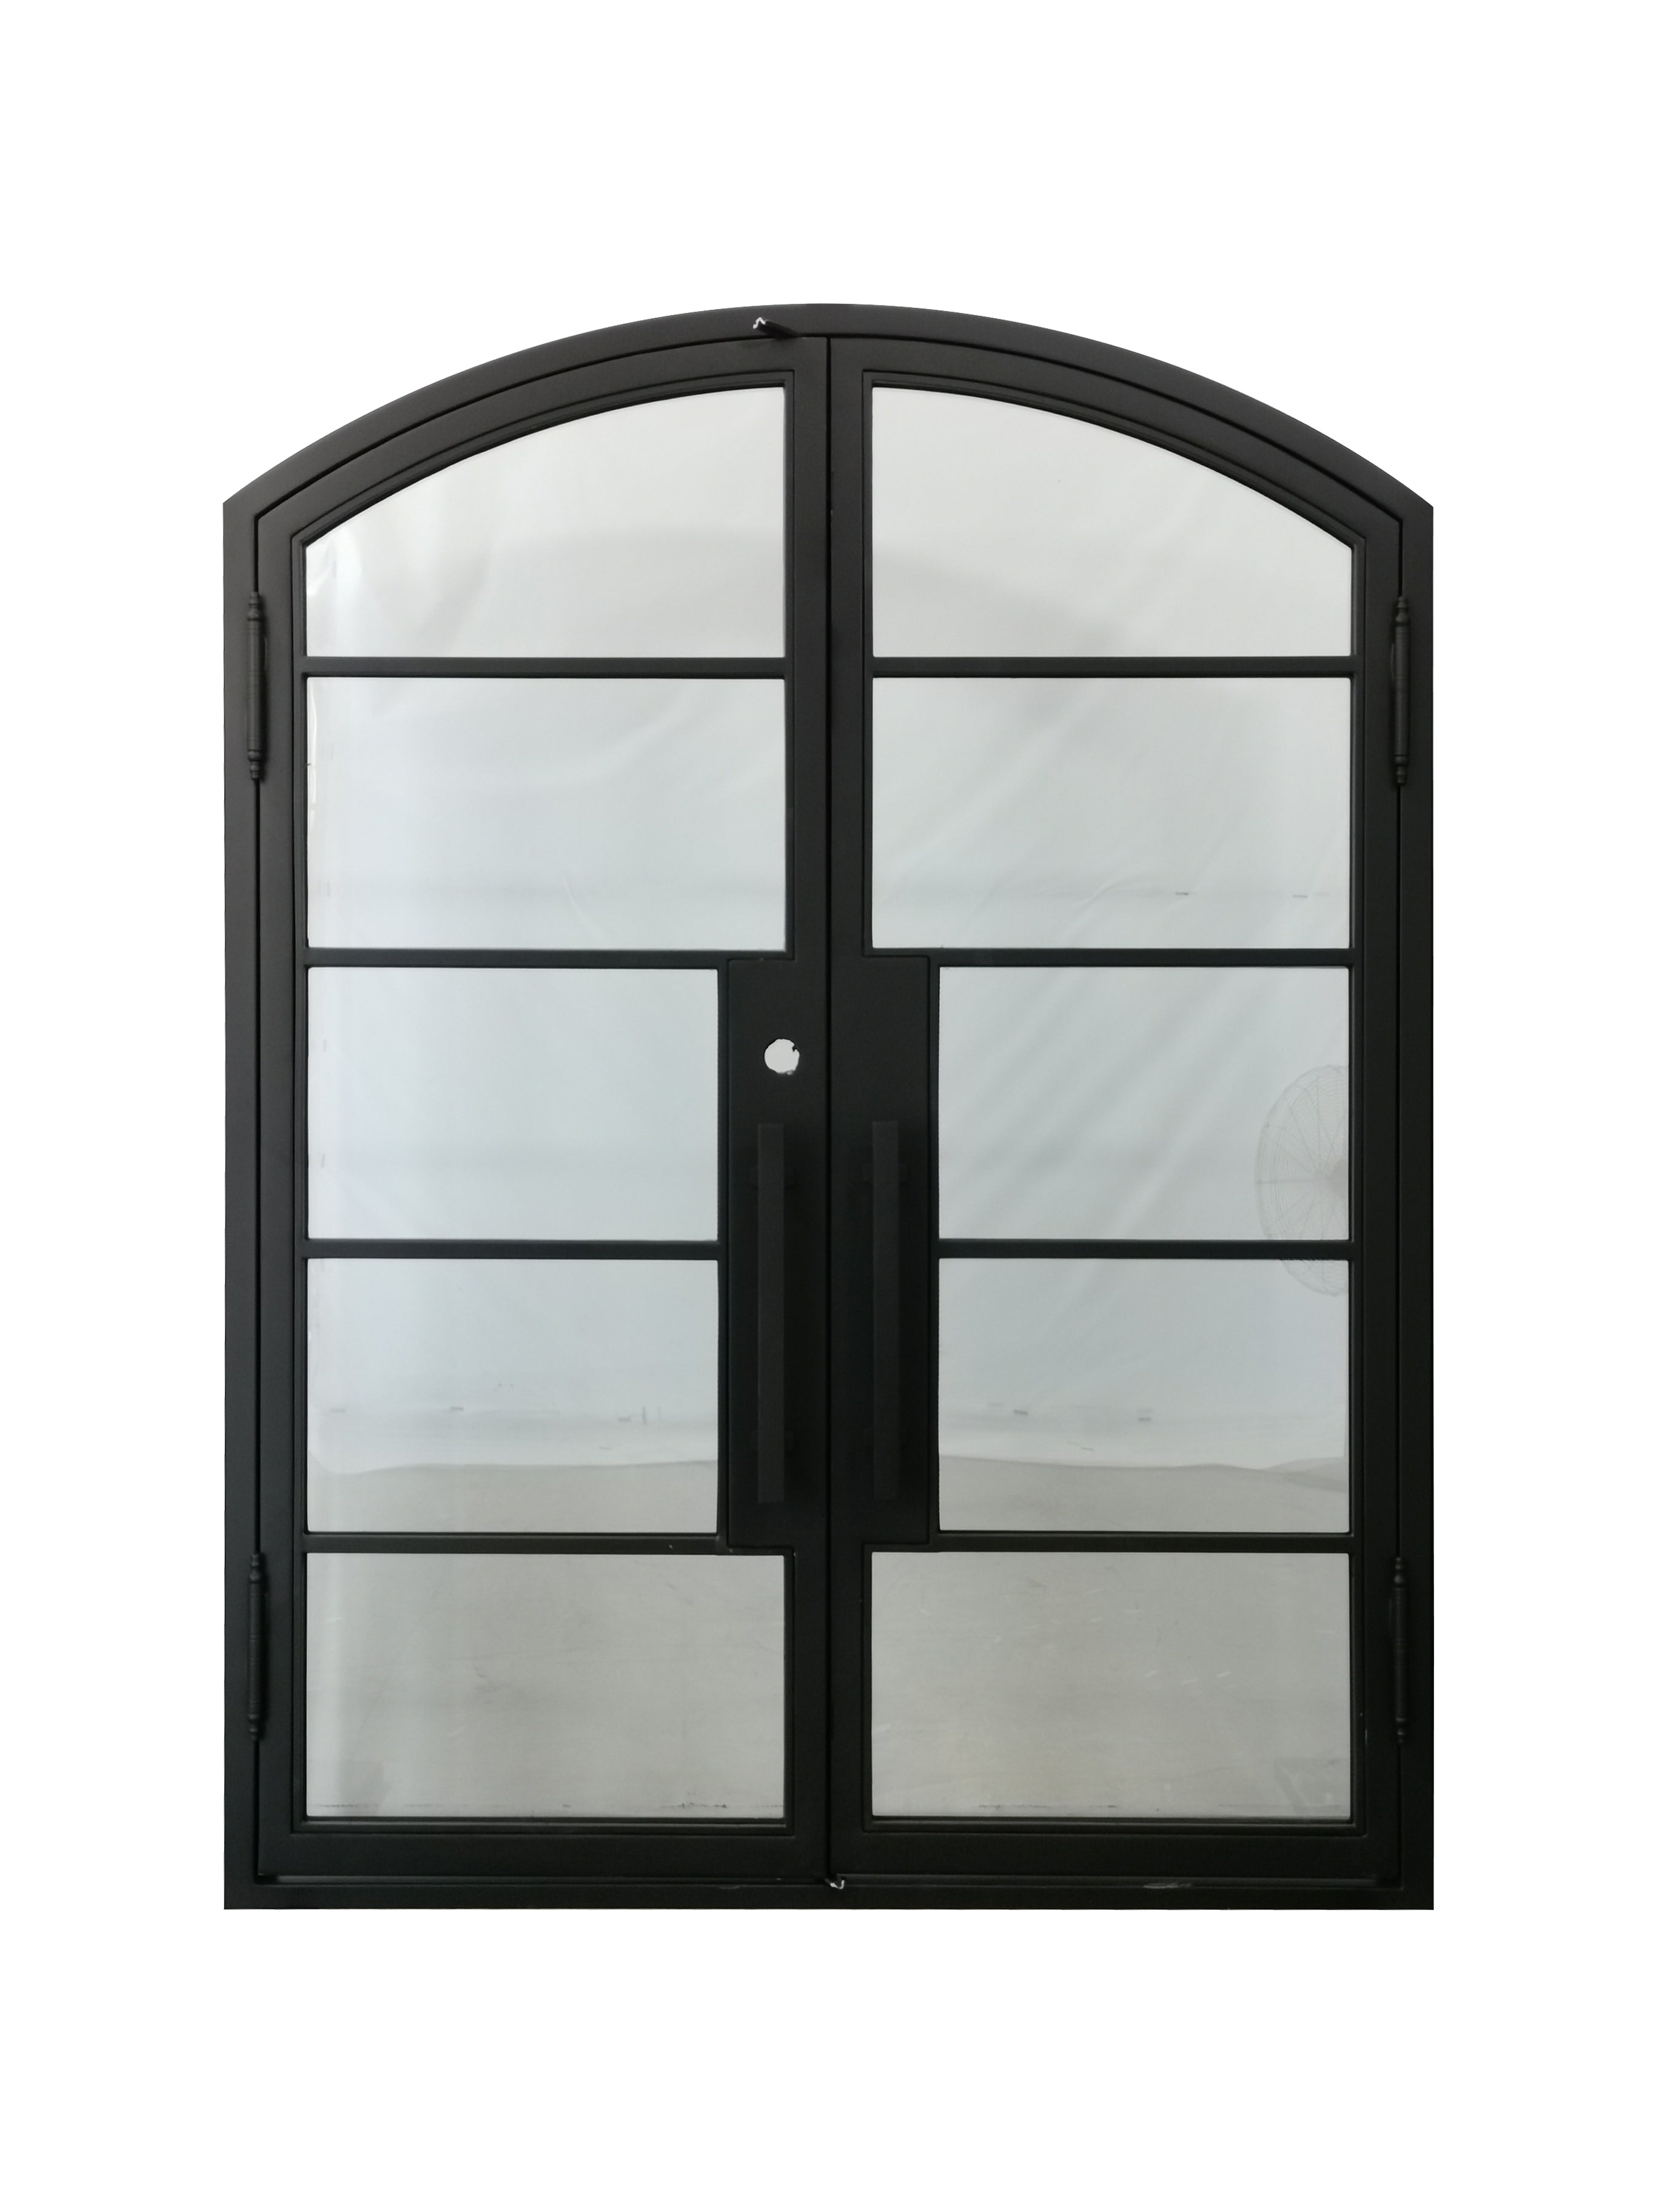 Malton Oak Double Door and Frame Set - Diamond style Black Caming Tri